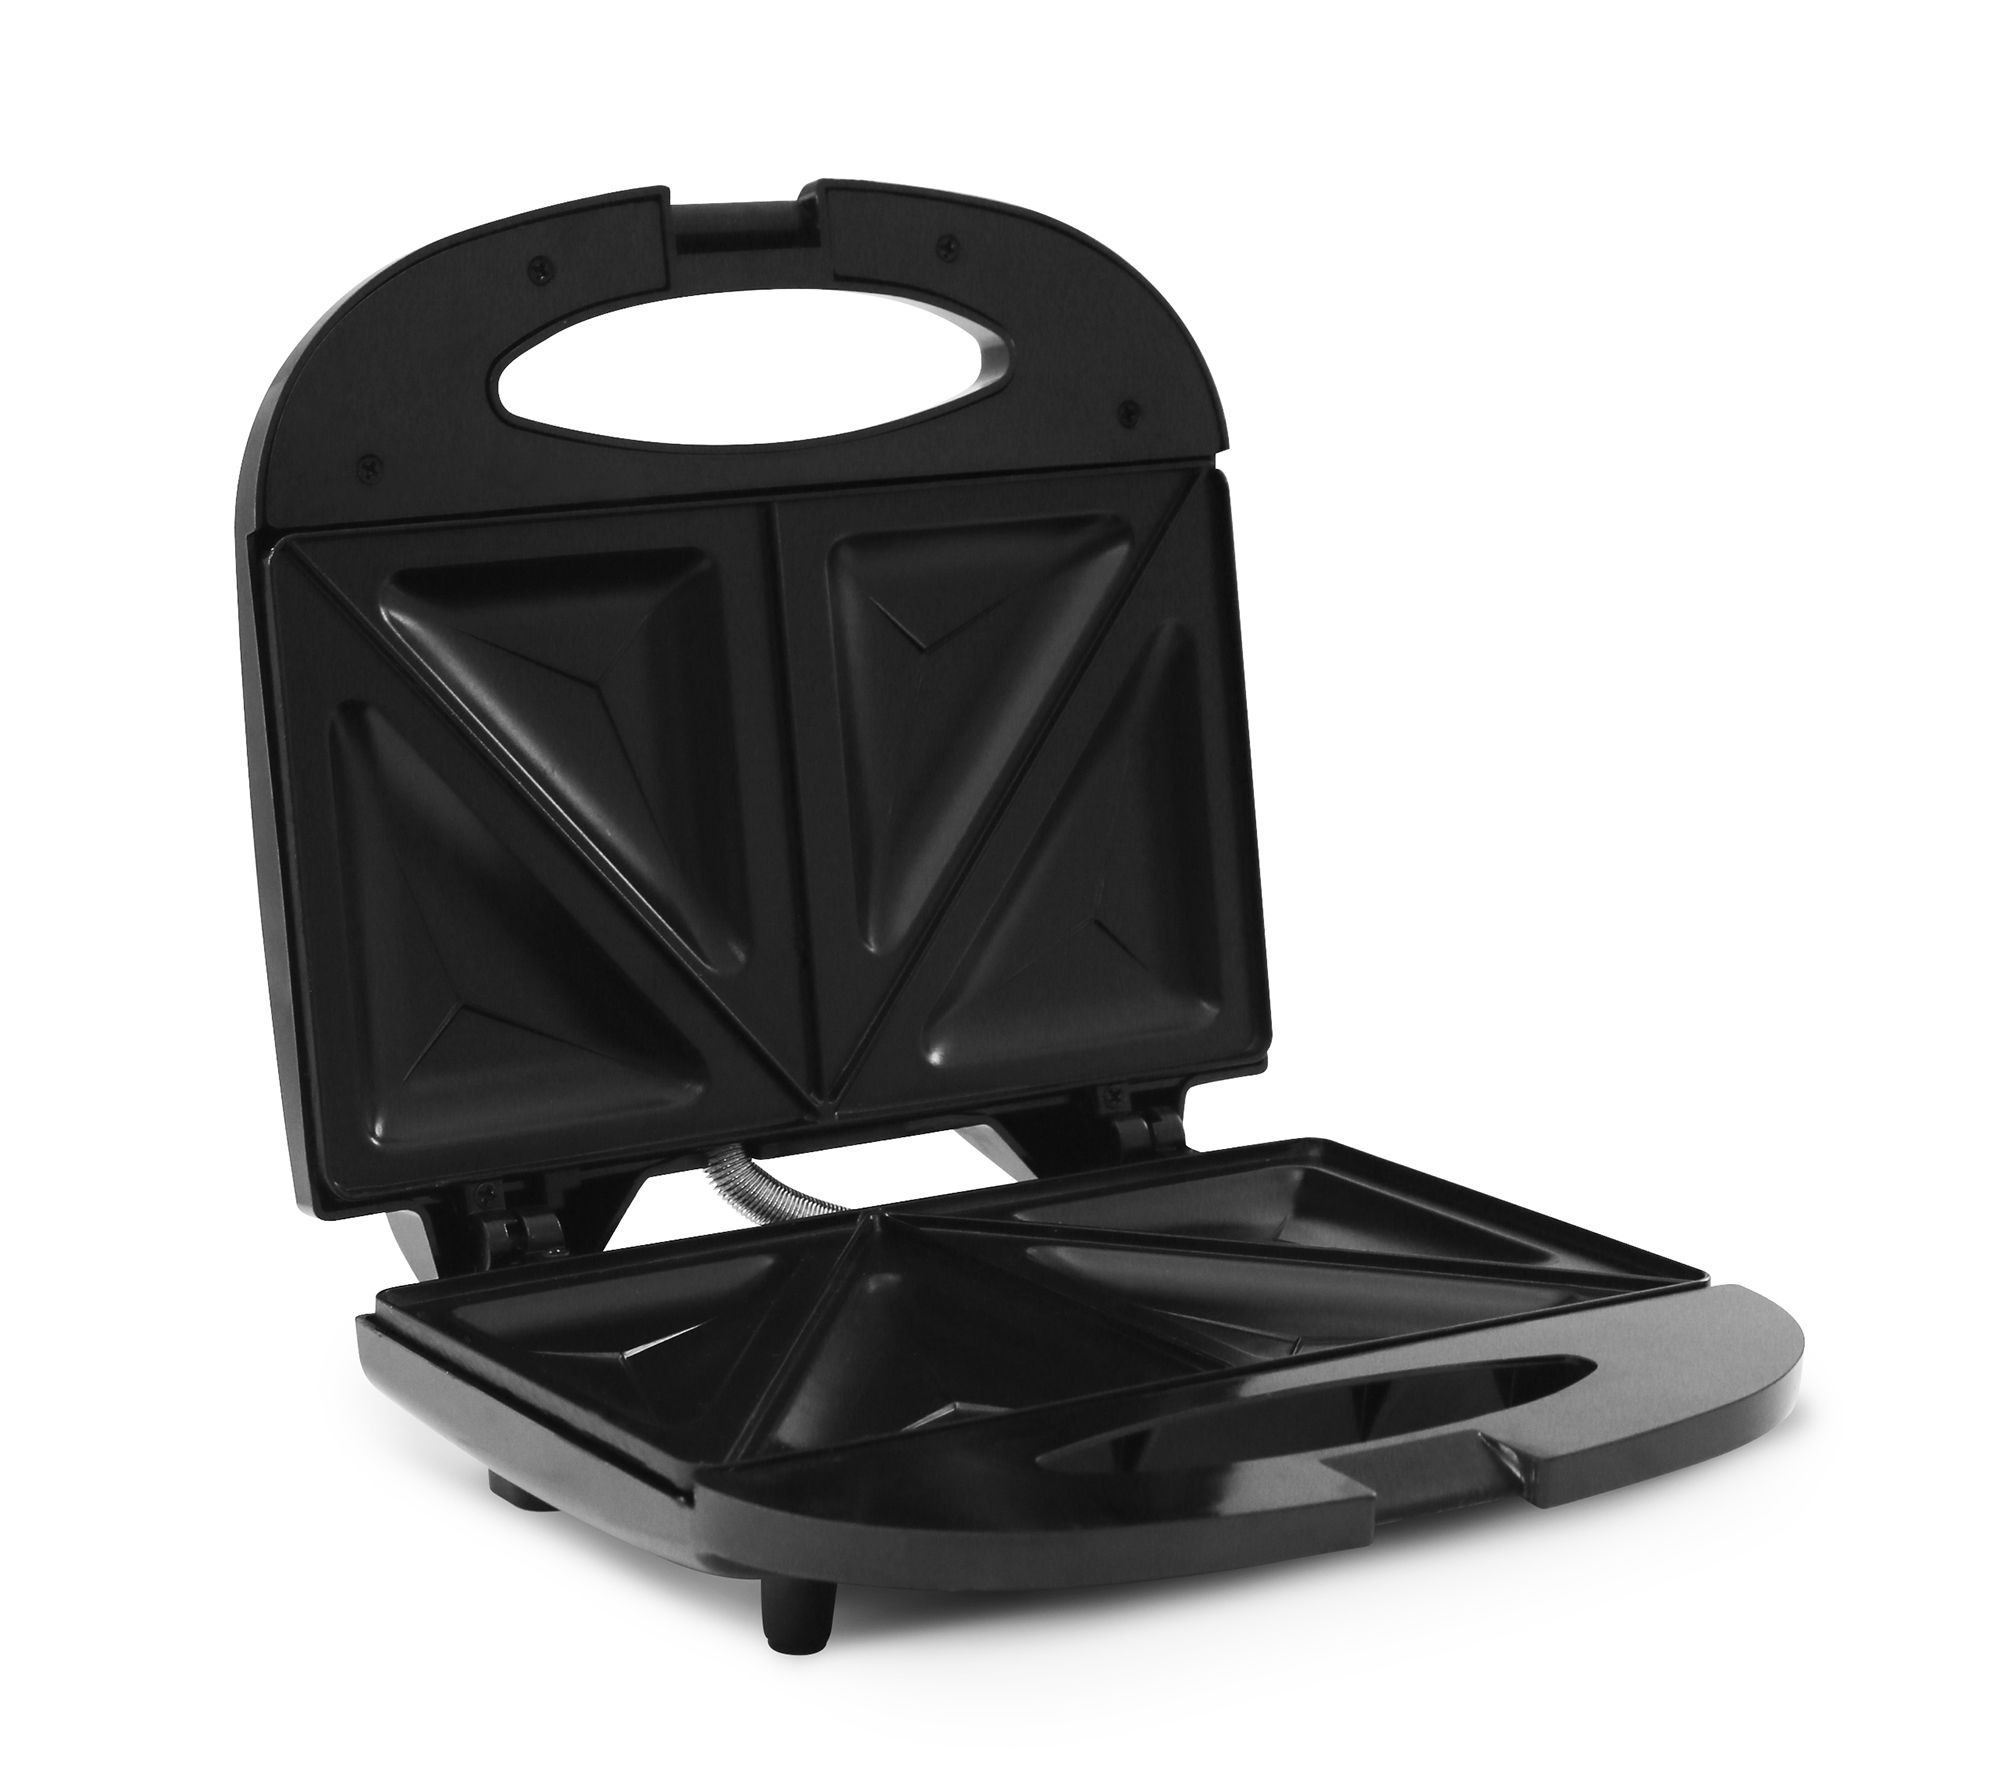 Chefman 750 W Black Portable Sandwich Maker Compact, Nonstick